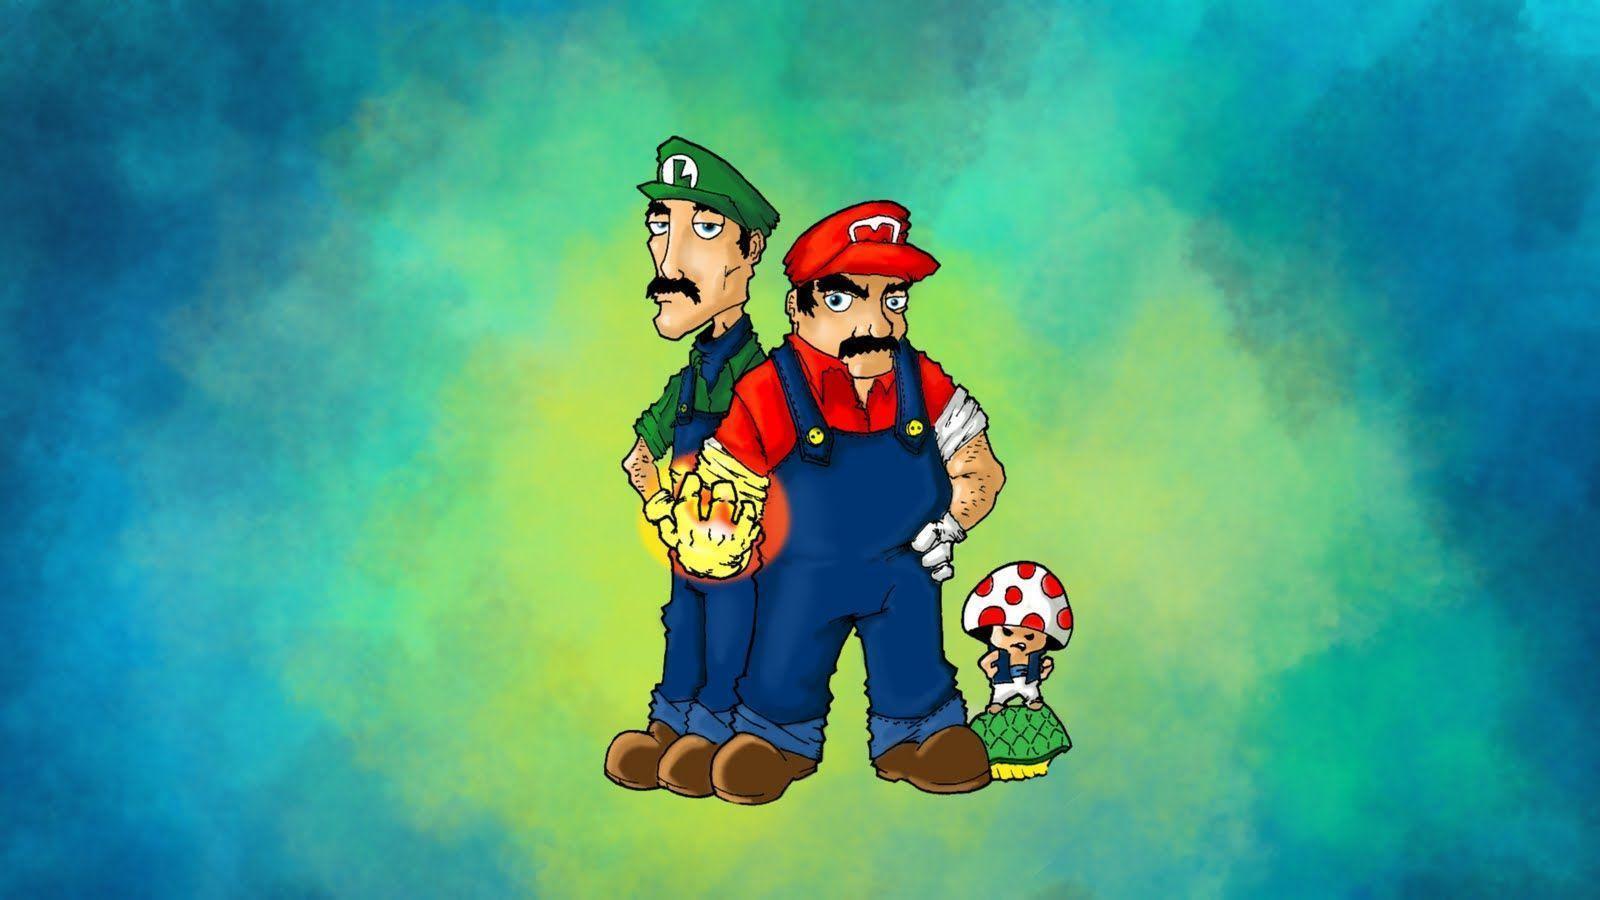 Free PSP Themes Wallpaper: Super Mario Wallpaper